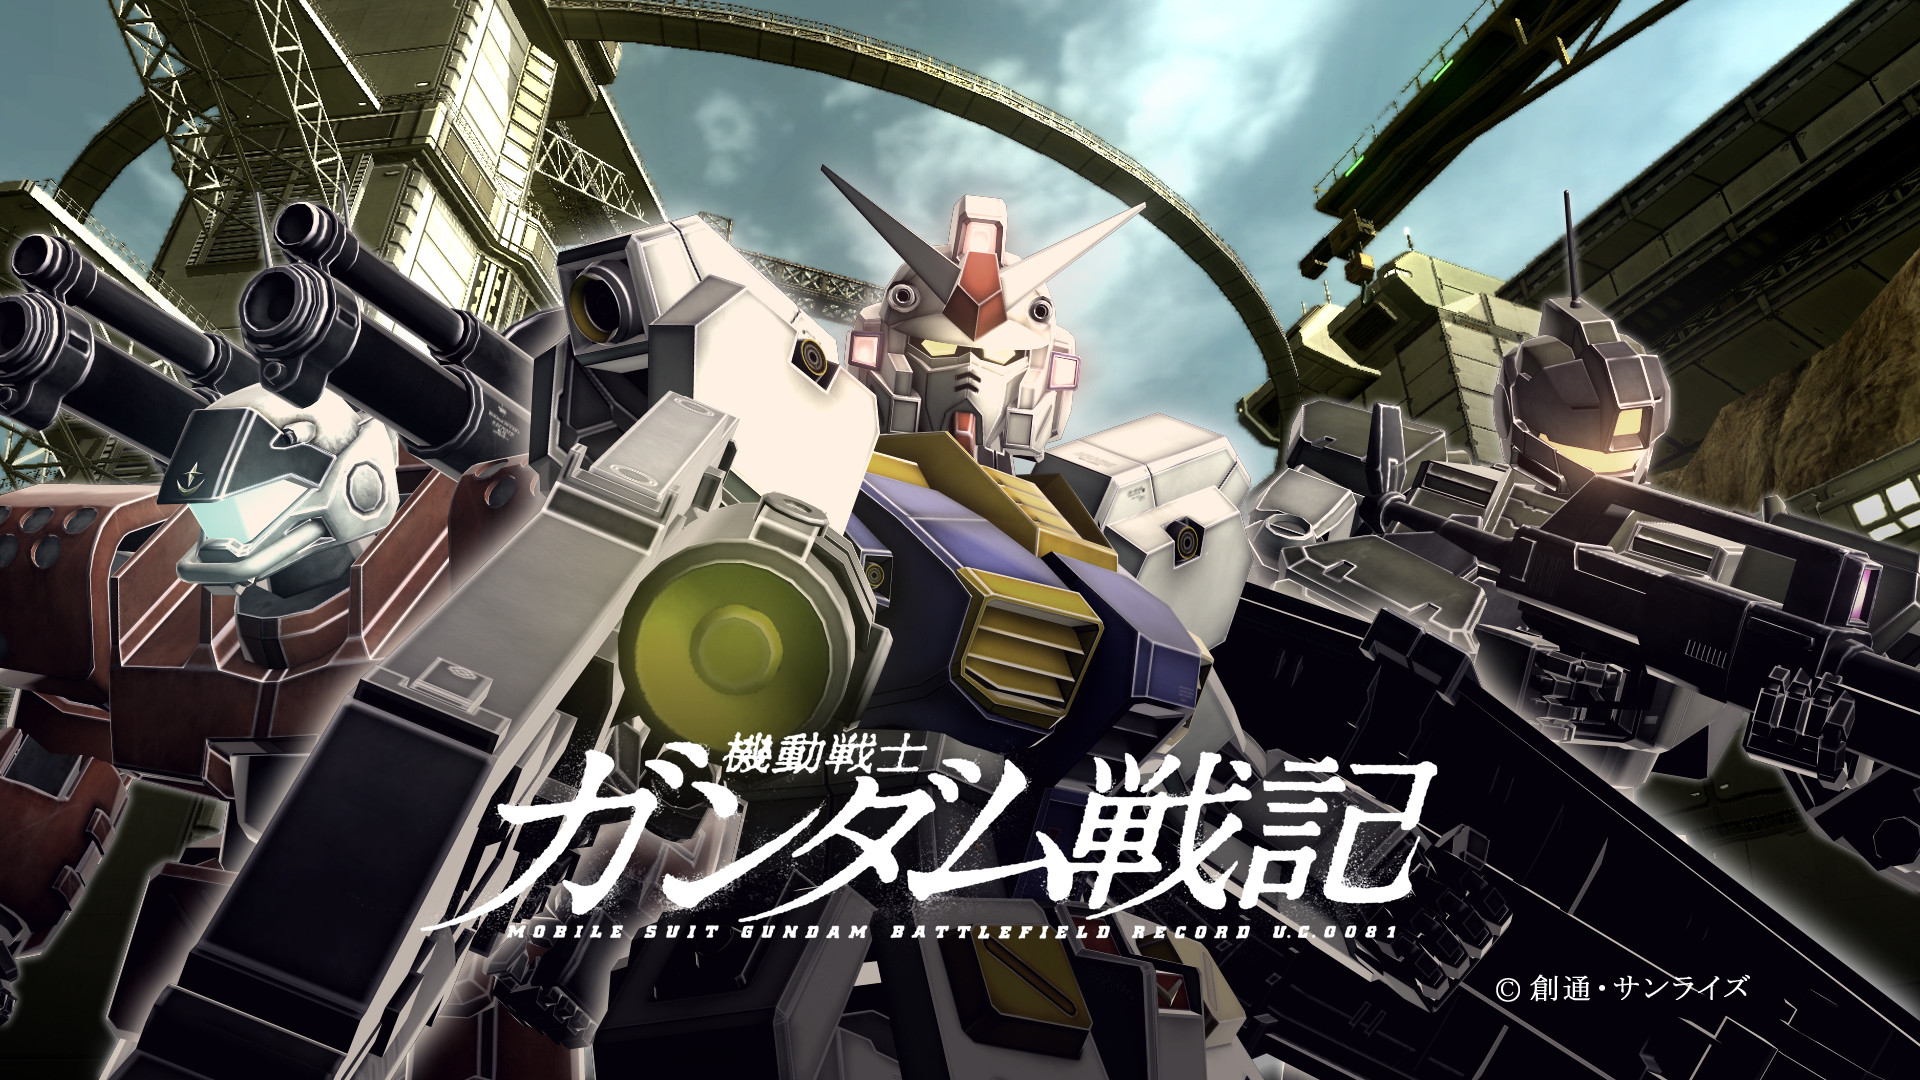 1920x1080 Gundam HD Wallpaper | Background Image |  | ID:226510 - Wallpaper  Abyss